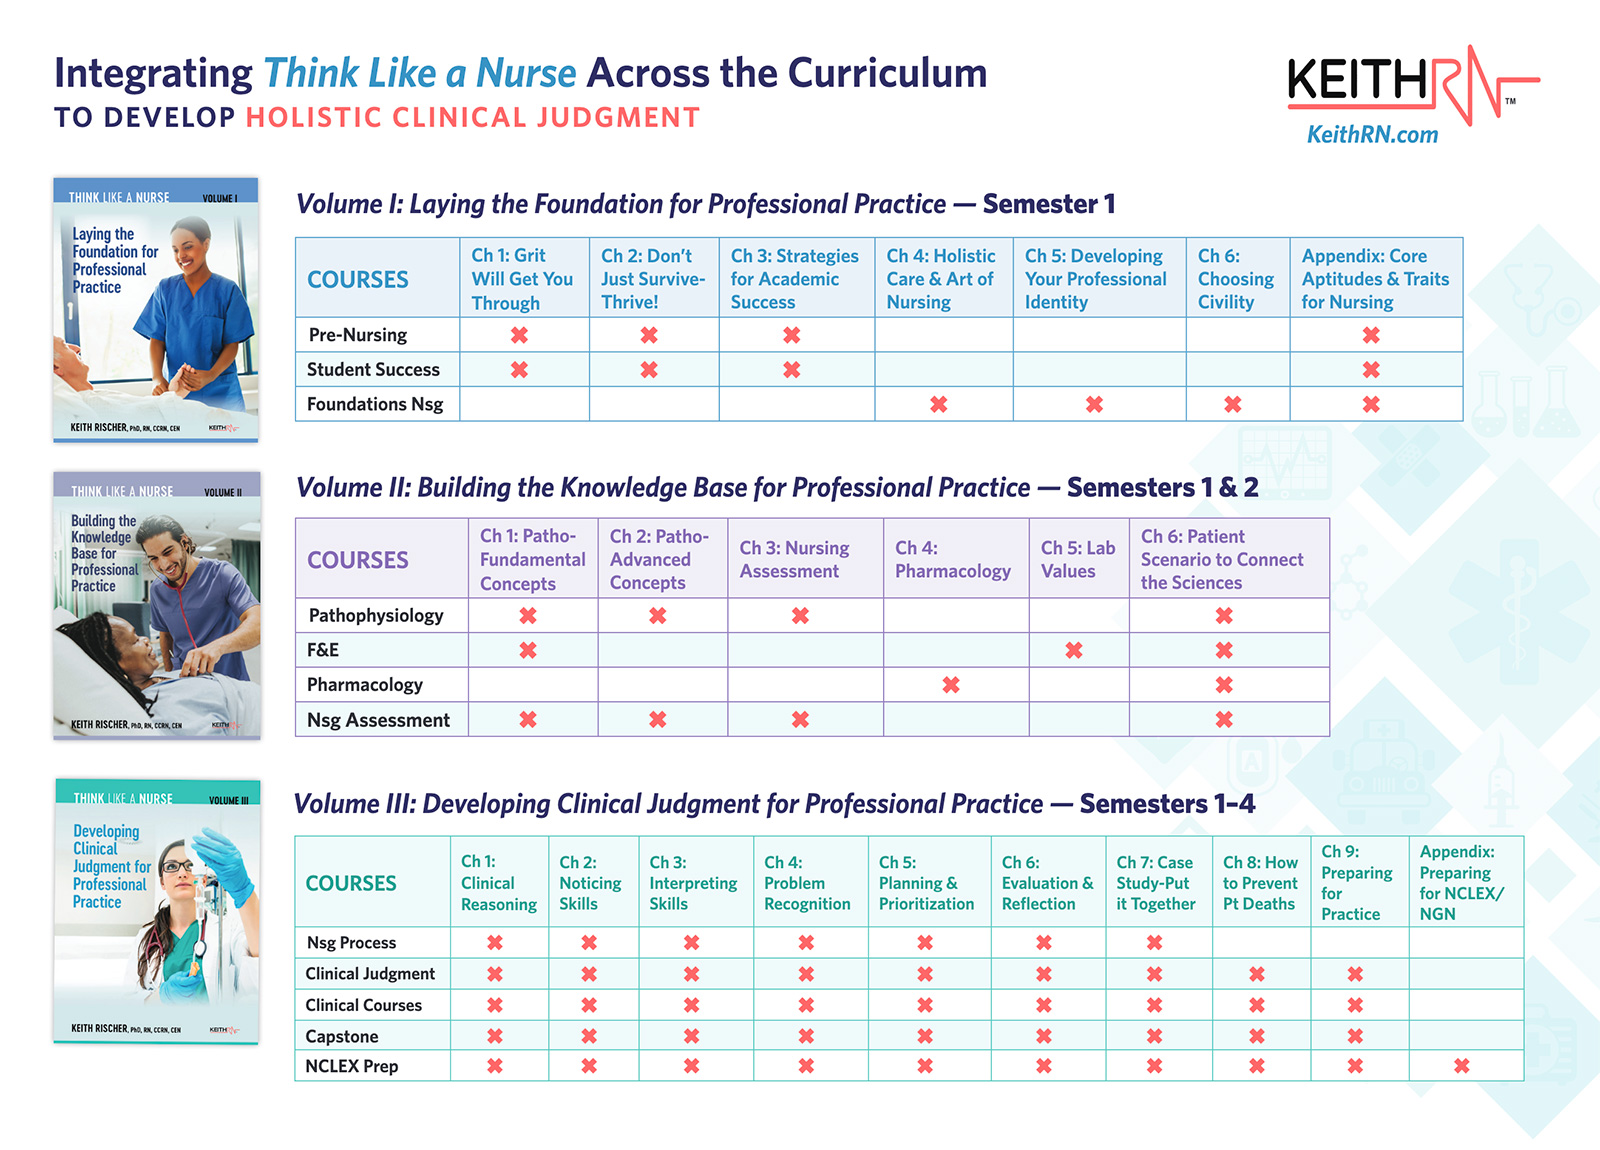 KeithRN Curriculum Map